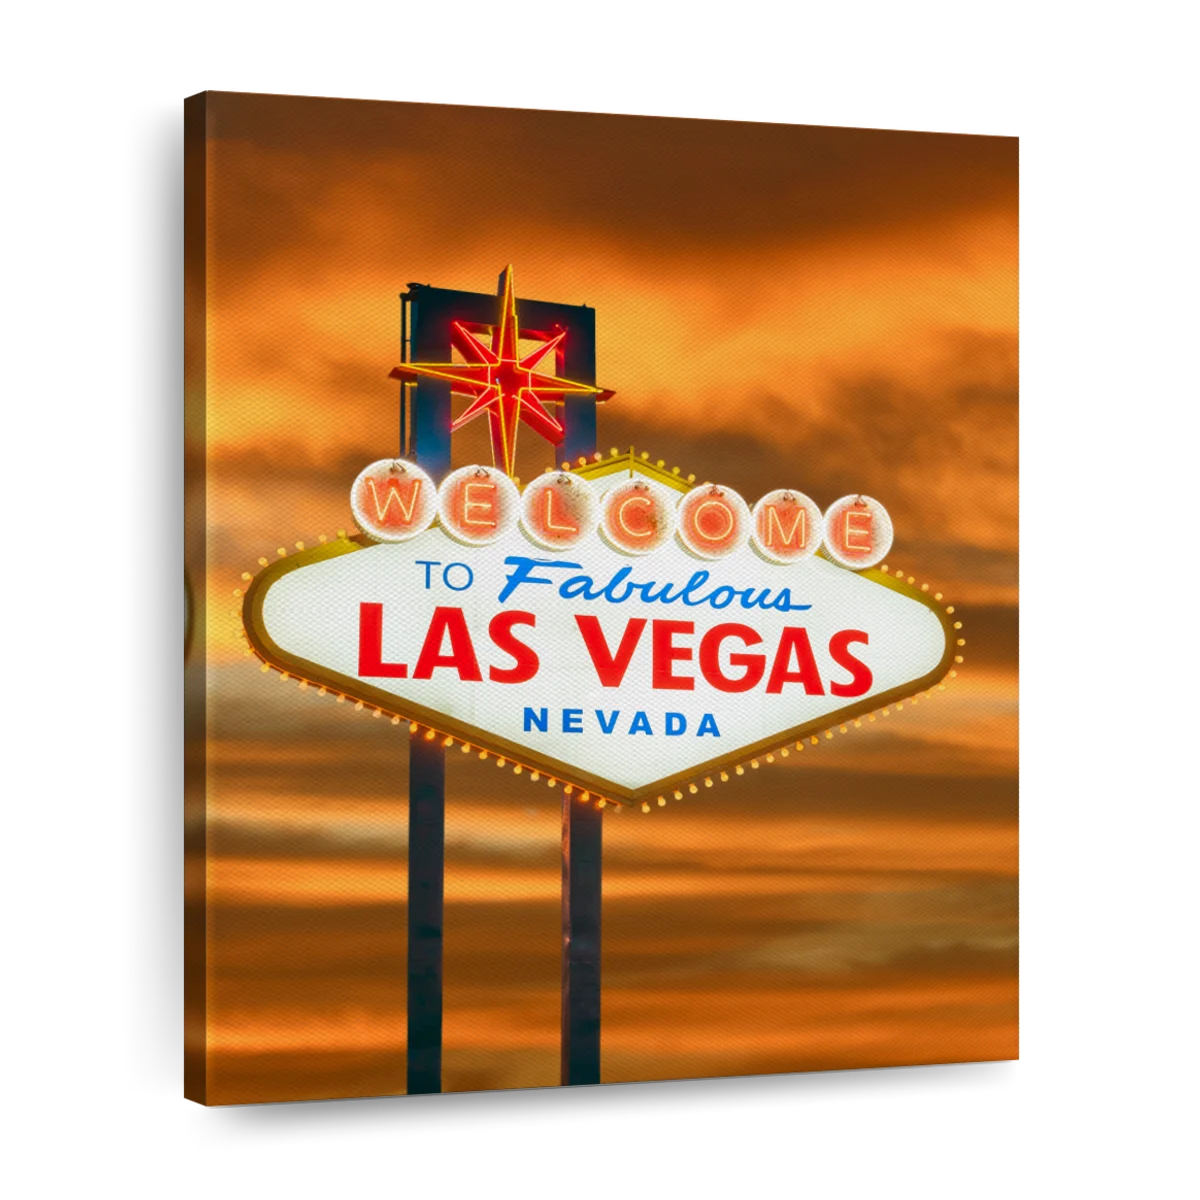 Las Vegas Sign at sunset. Welcome to Fabulous Las Vegas Nevada